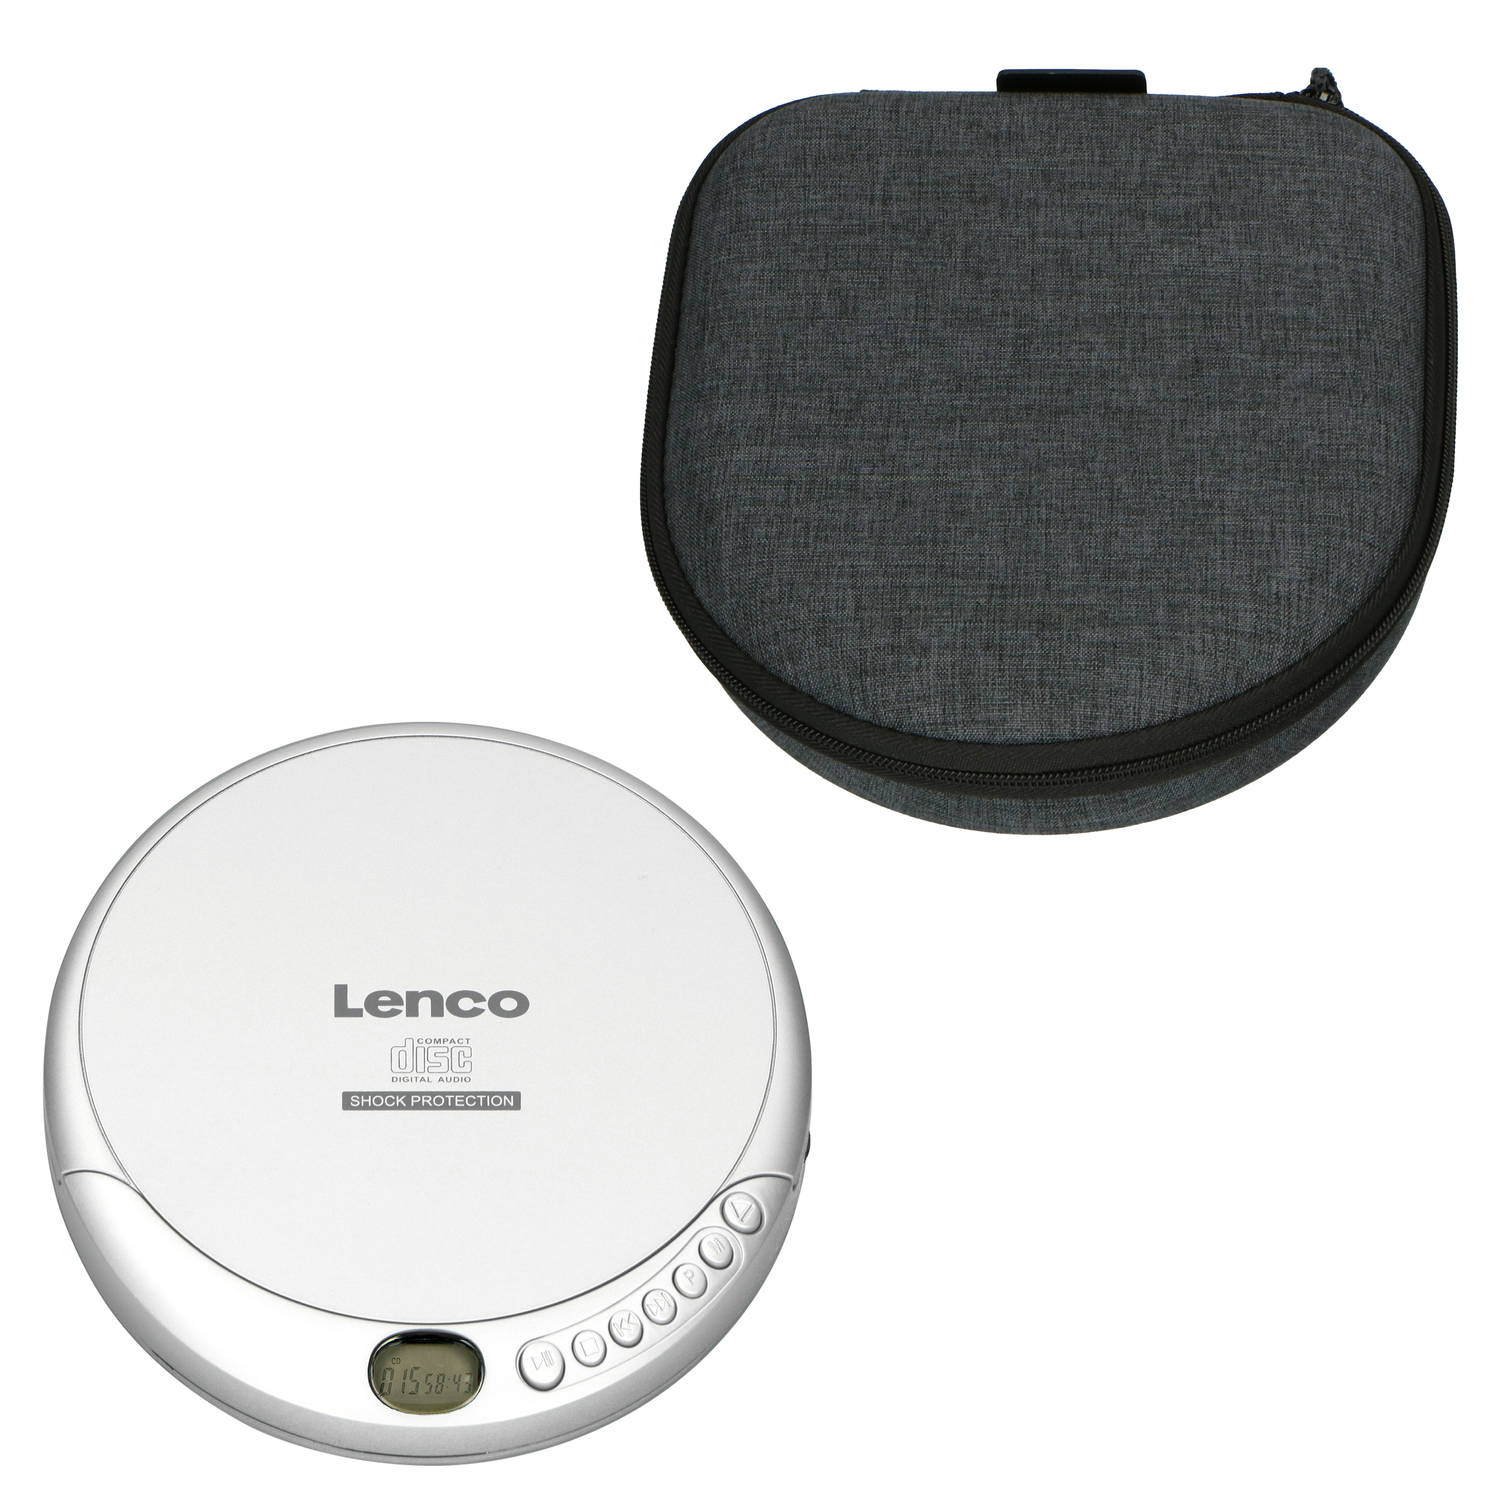 Lenco CD-201SI + PBC-50GY - Discman met Opbergcase inclusief Powerbank - Zilver/Grijs